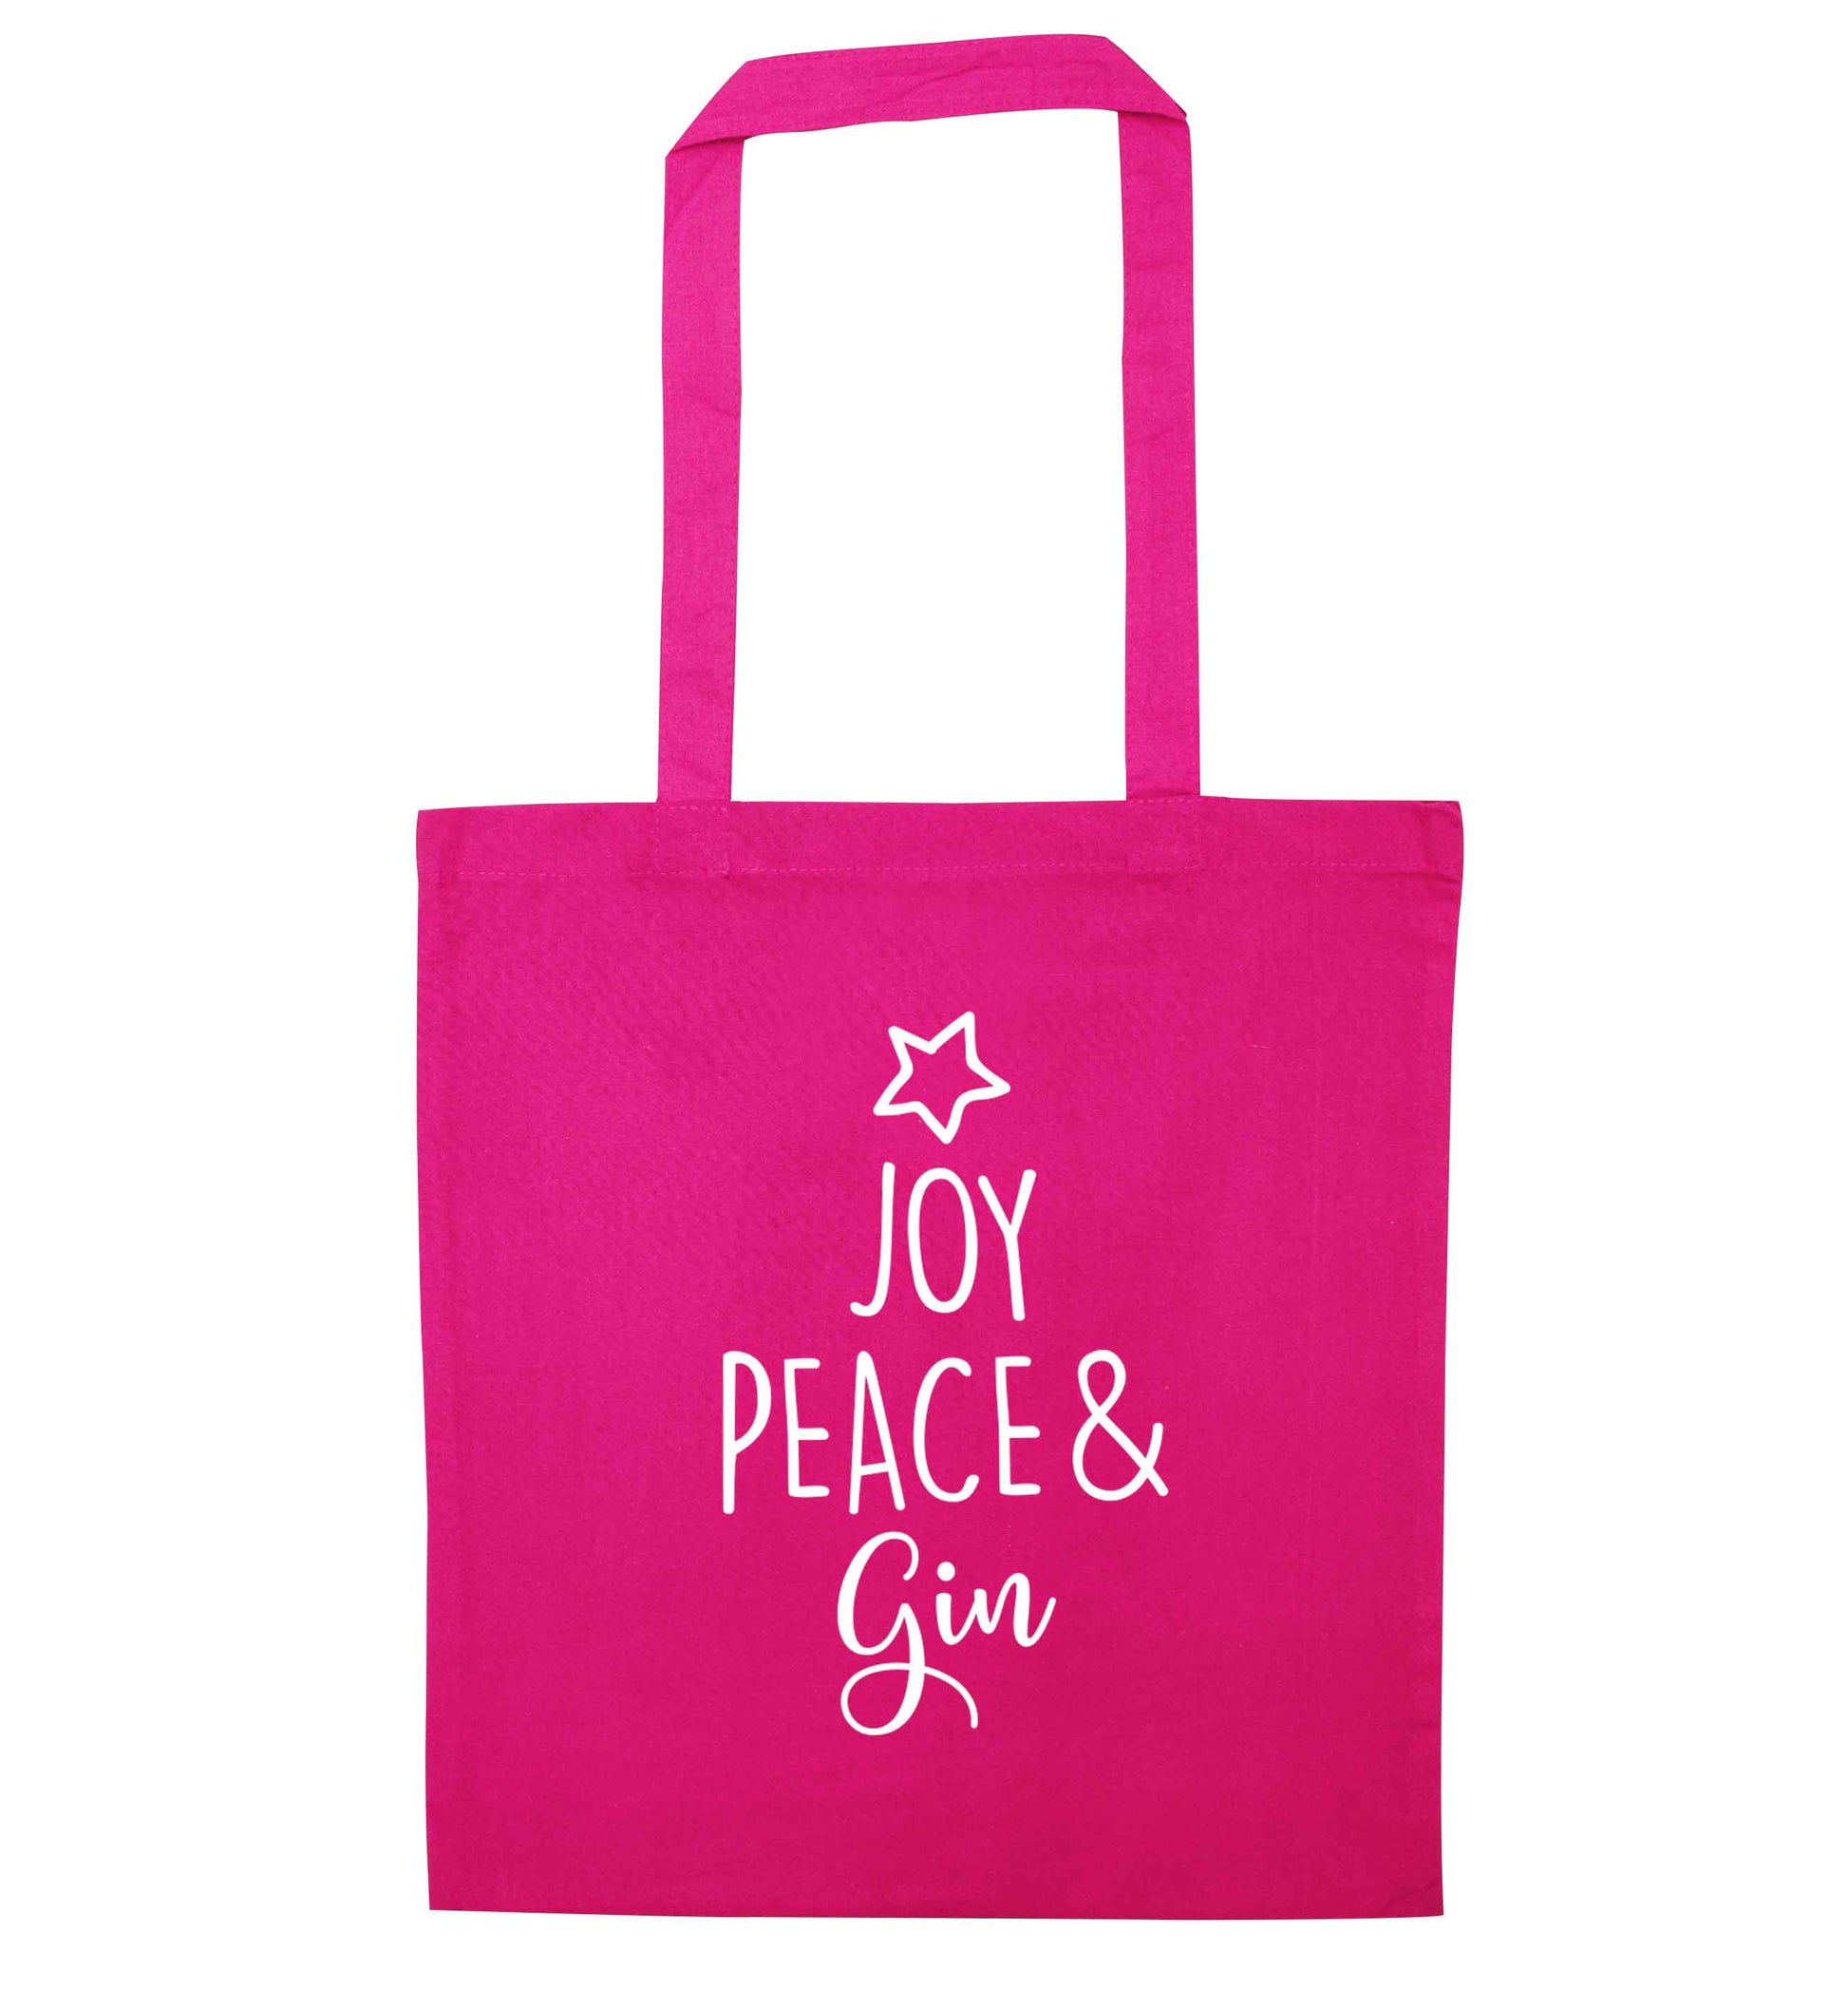 Joy peace and gin pink tote bag